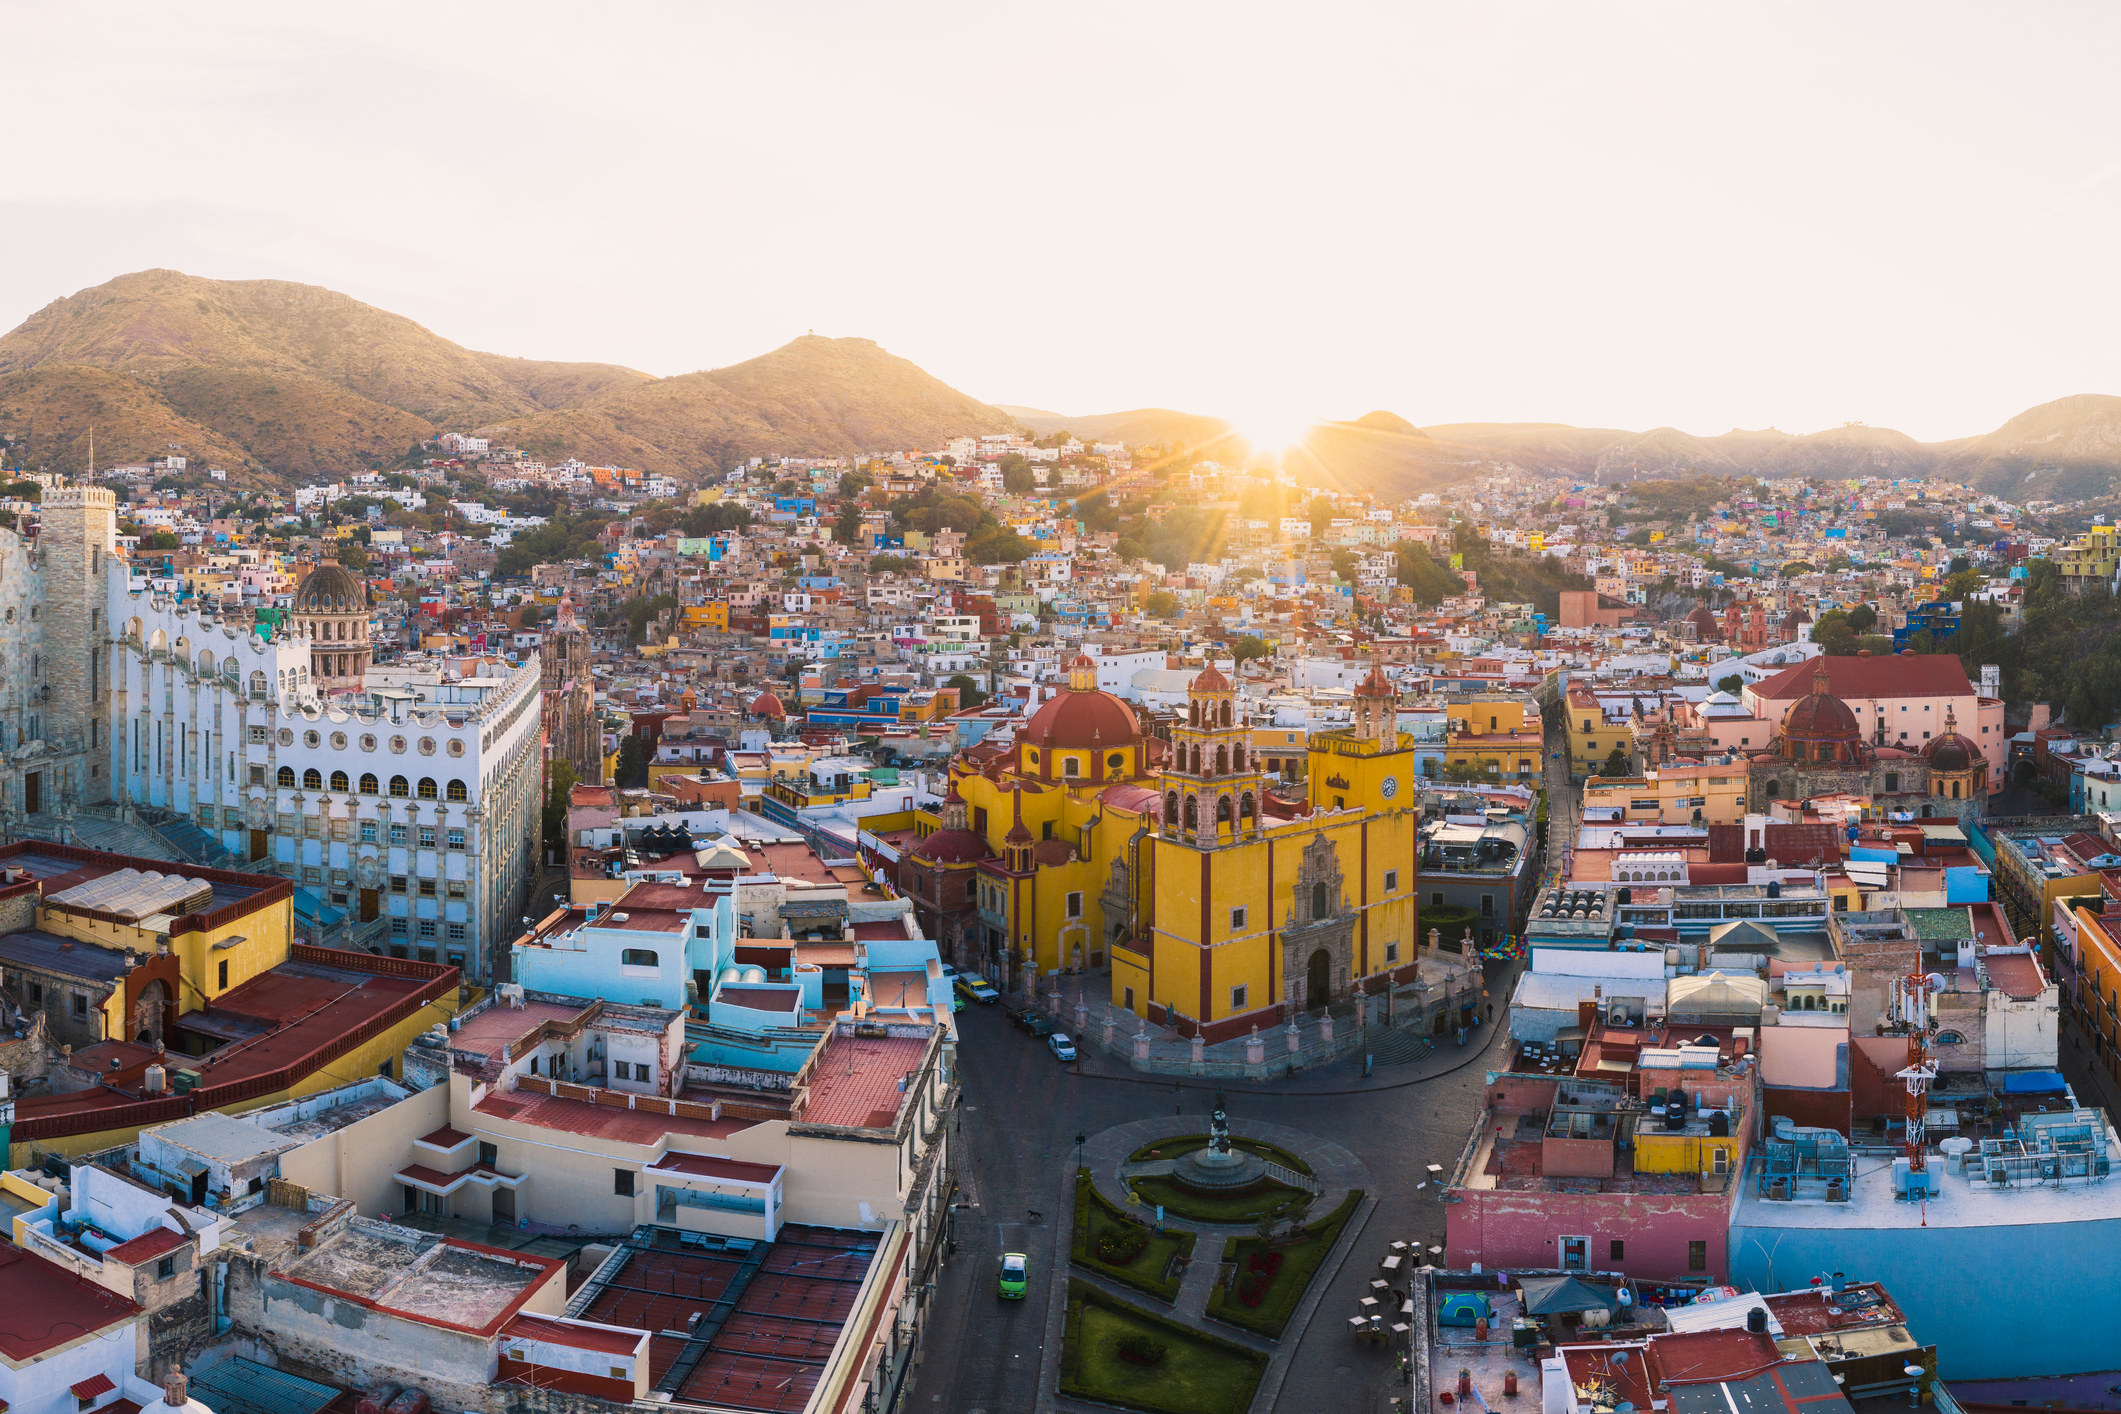 The colorful colonial city of Guanajuato.